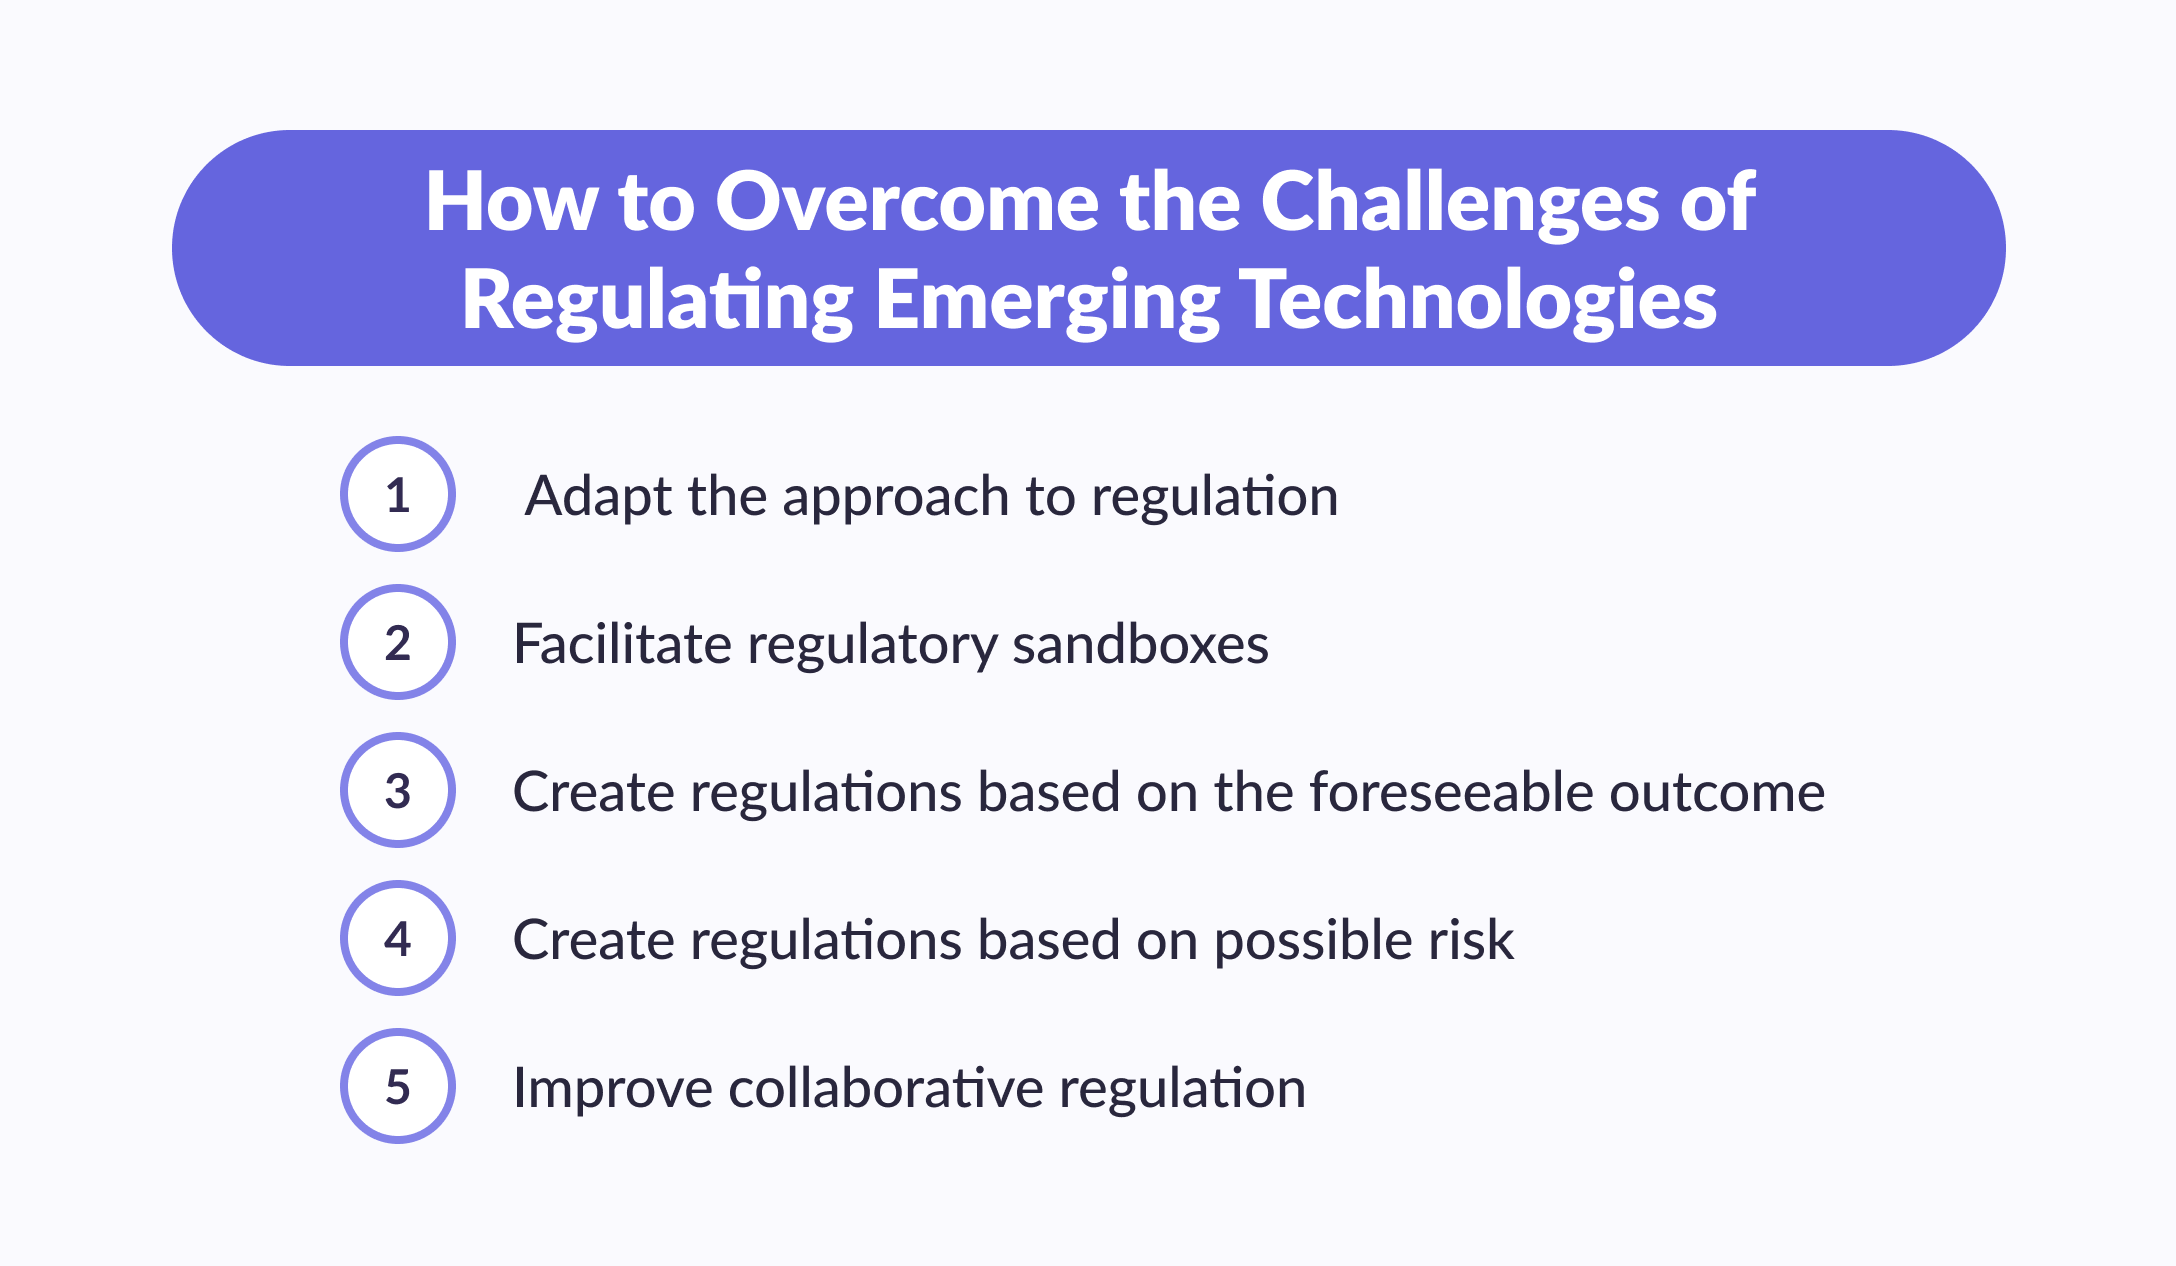 How to overcome challengenes of regulating emerging technologies